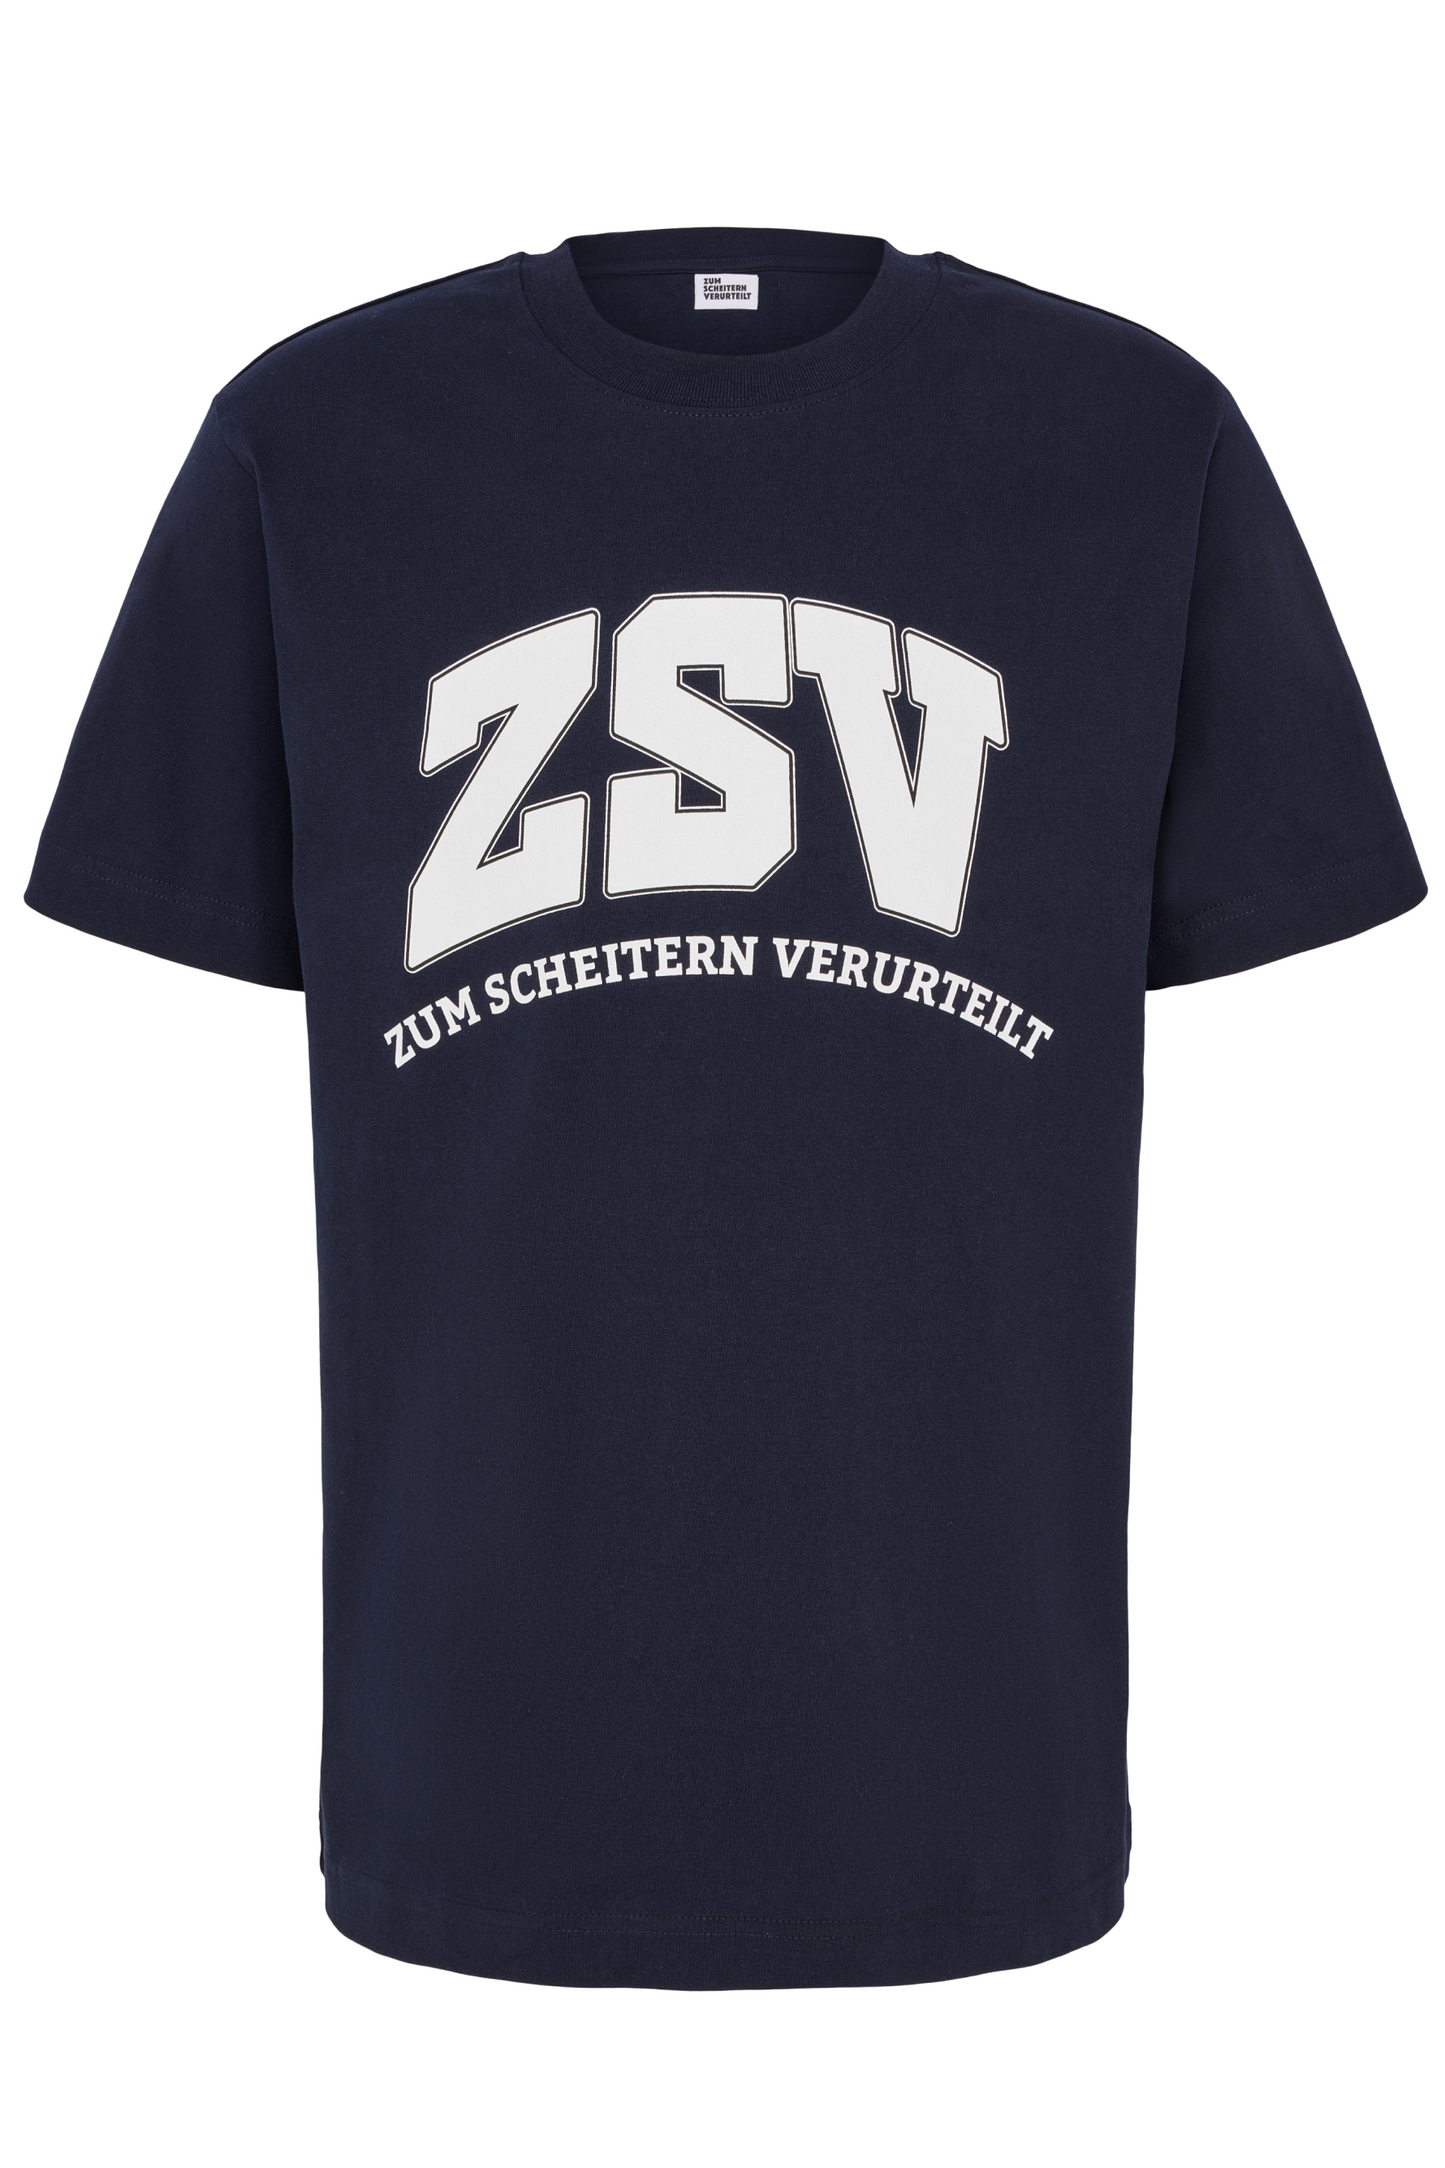 ZSV Shirt College Style - unisex Navy